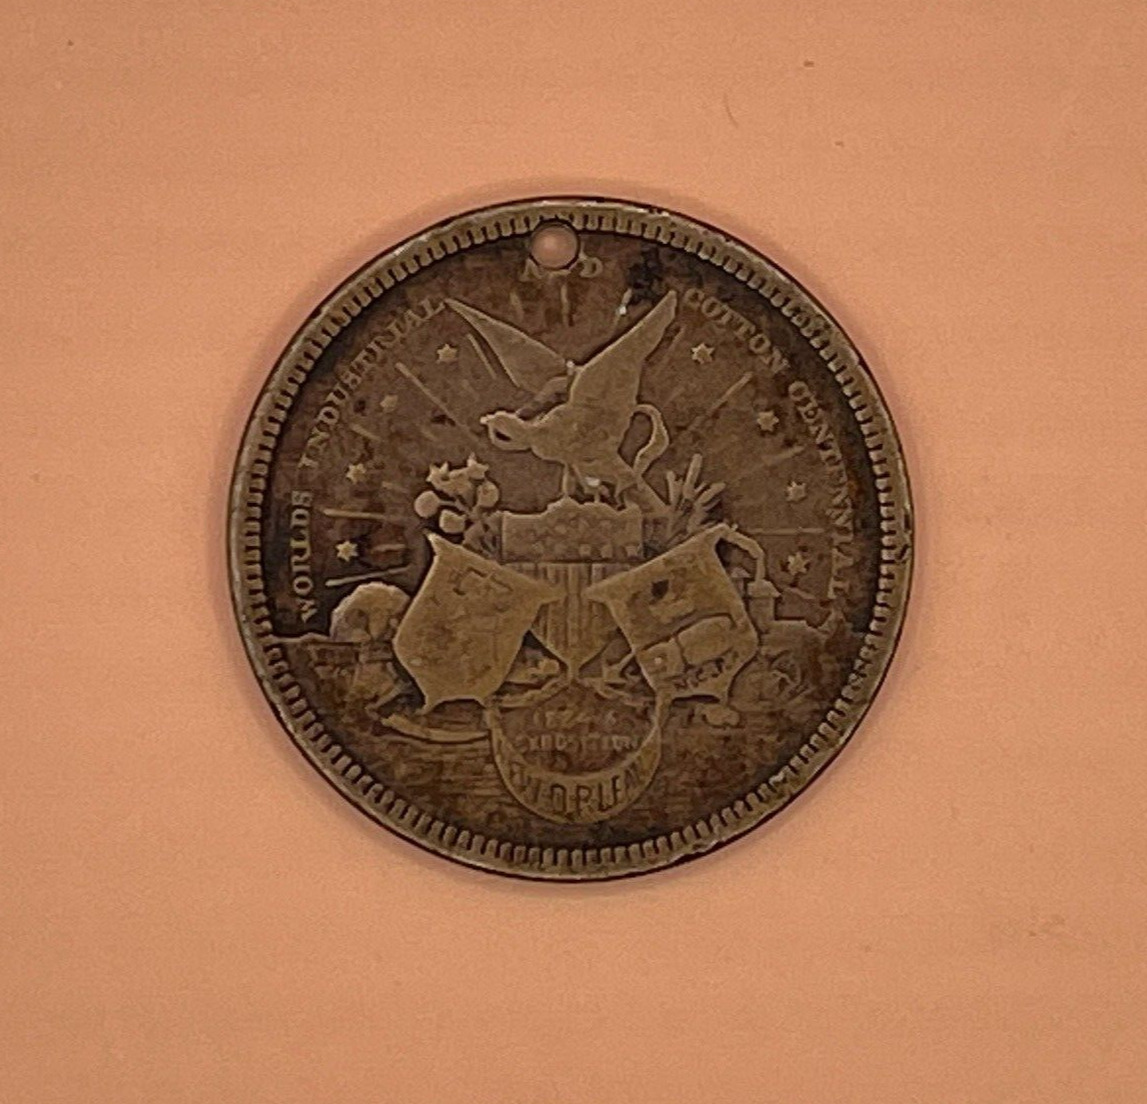 1884 New Orleans Cotton Centennial Exposition Medal 17.5mm